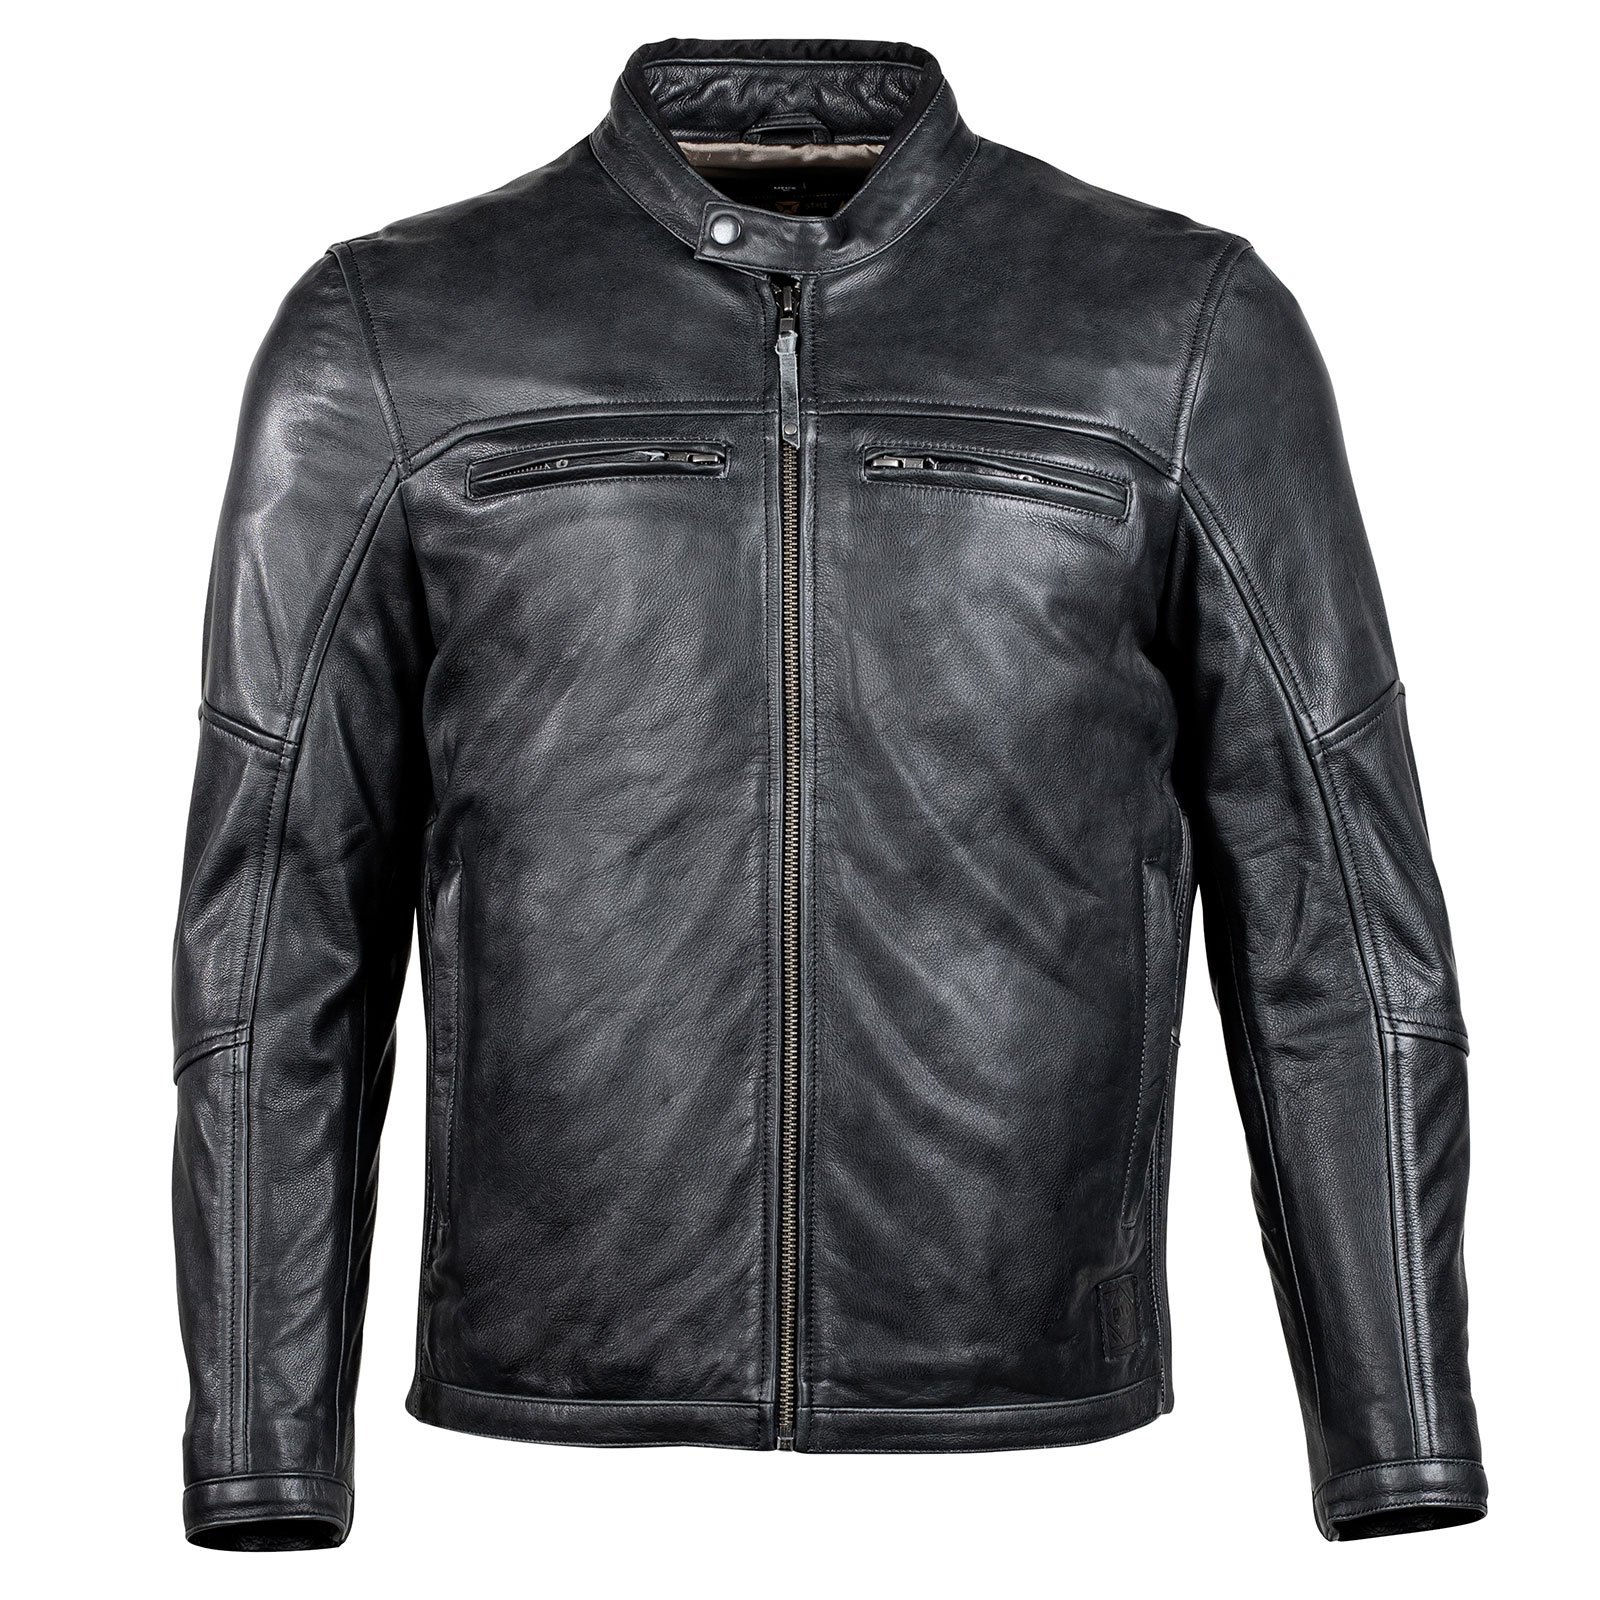 Cortech “The Idol” Jacket, Black – Baxter Cycle